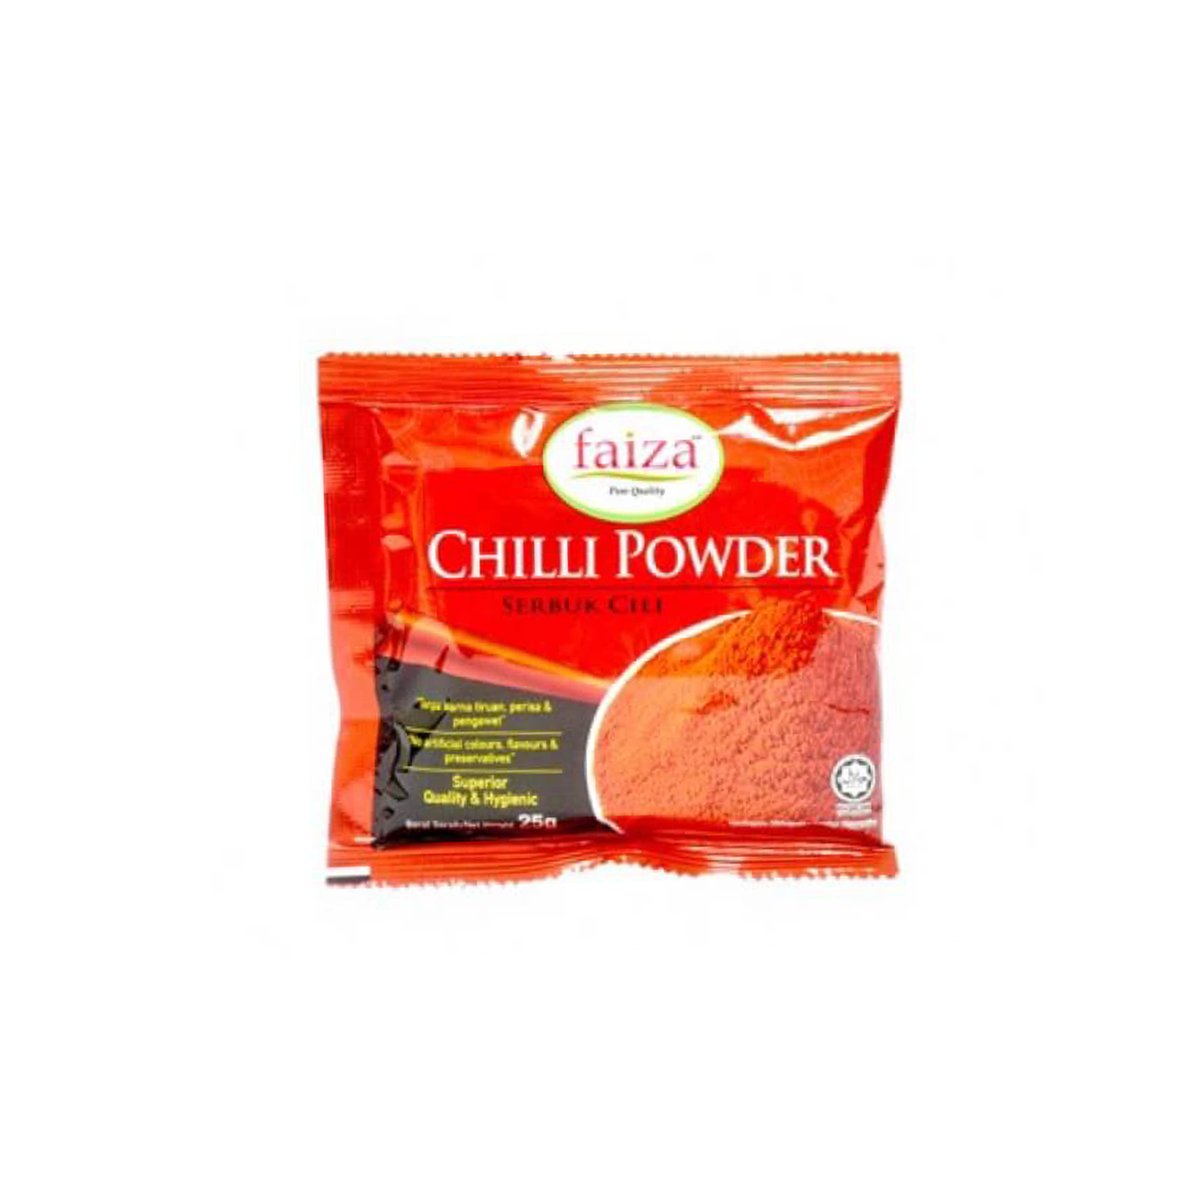 Faiza Serbuk Cili(Chilli Powder)25g